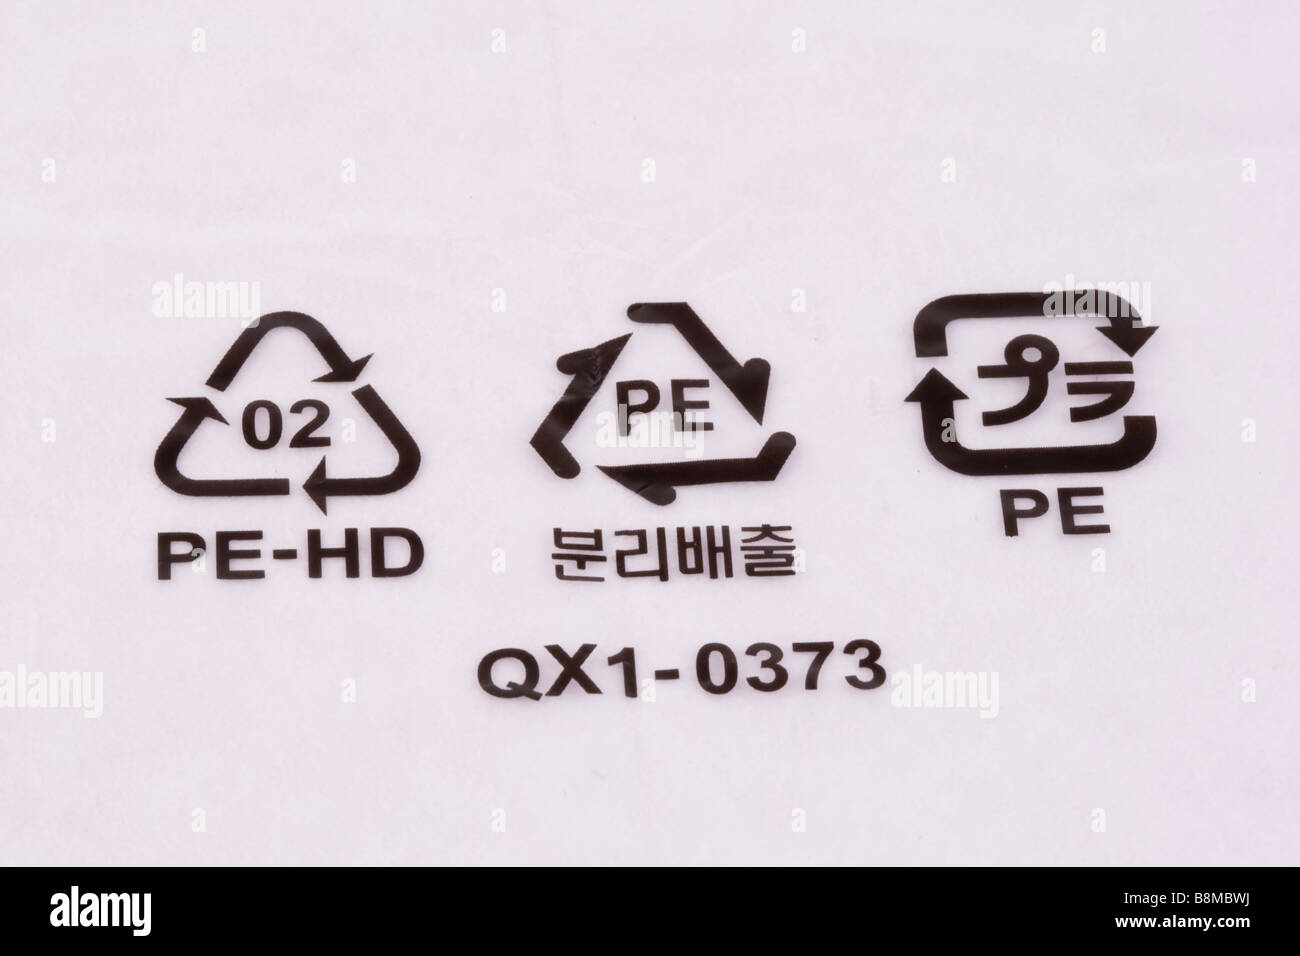 HDPE high density polyethylene logo on bag UK Stock Photo